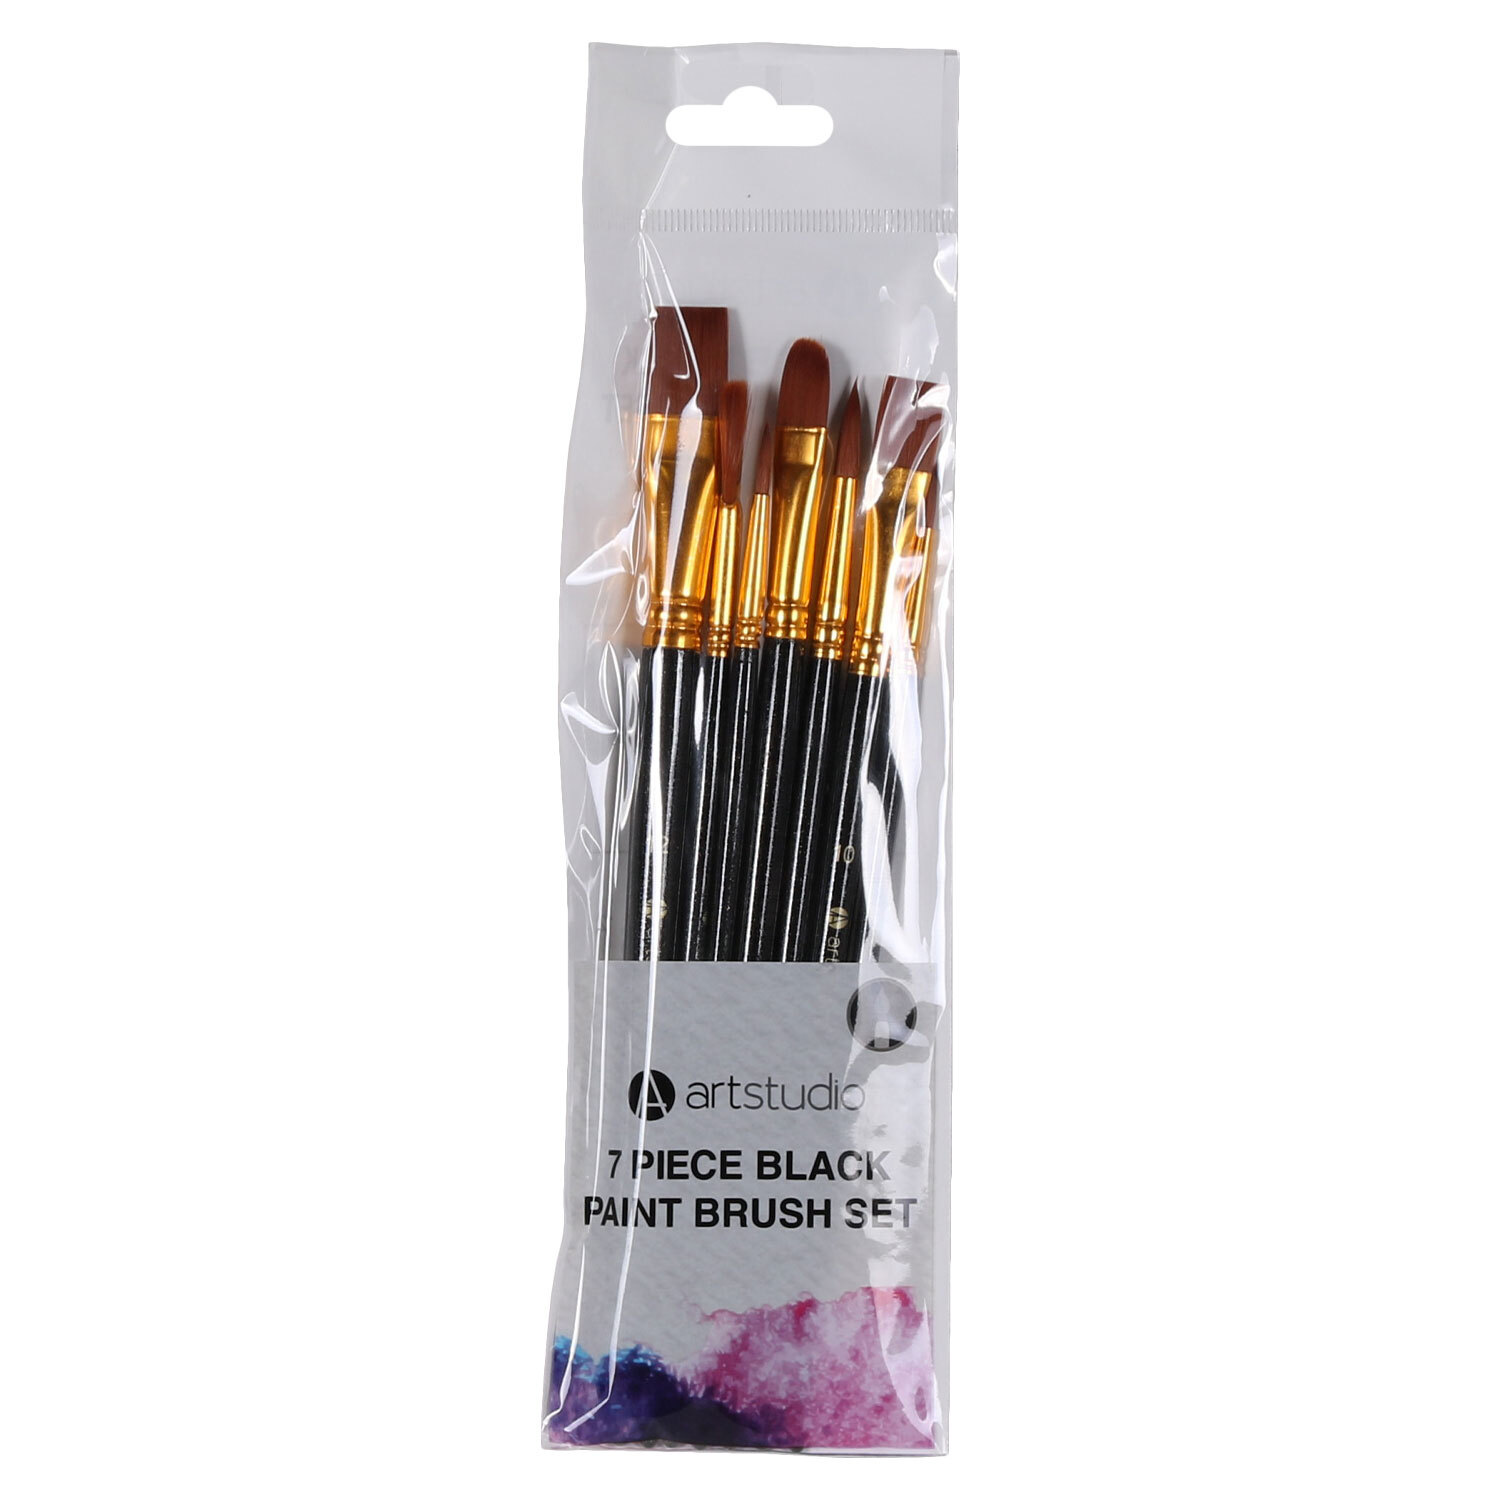 7-Piece Paint Brush Set - Black Image